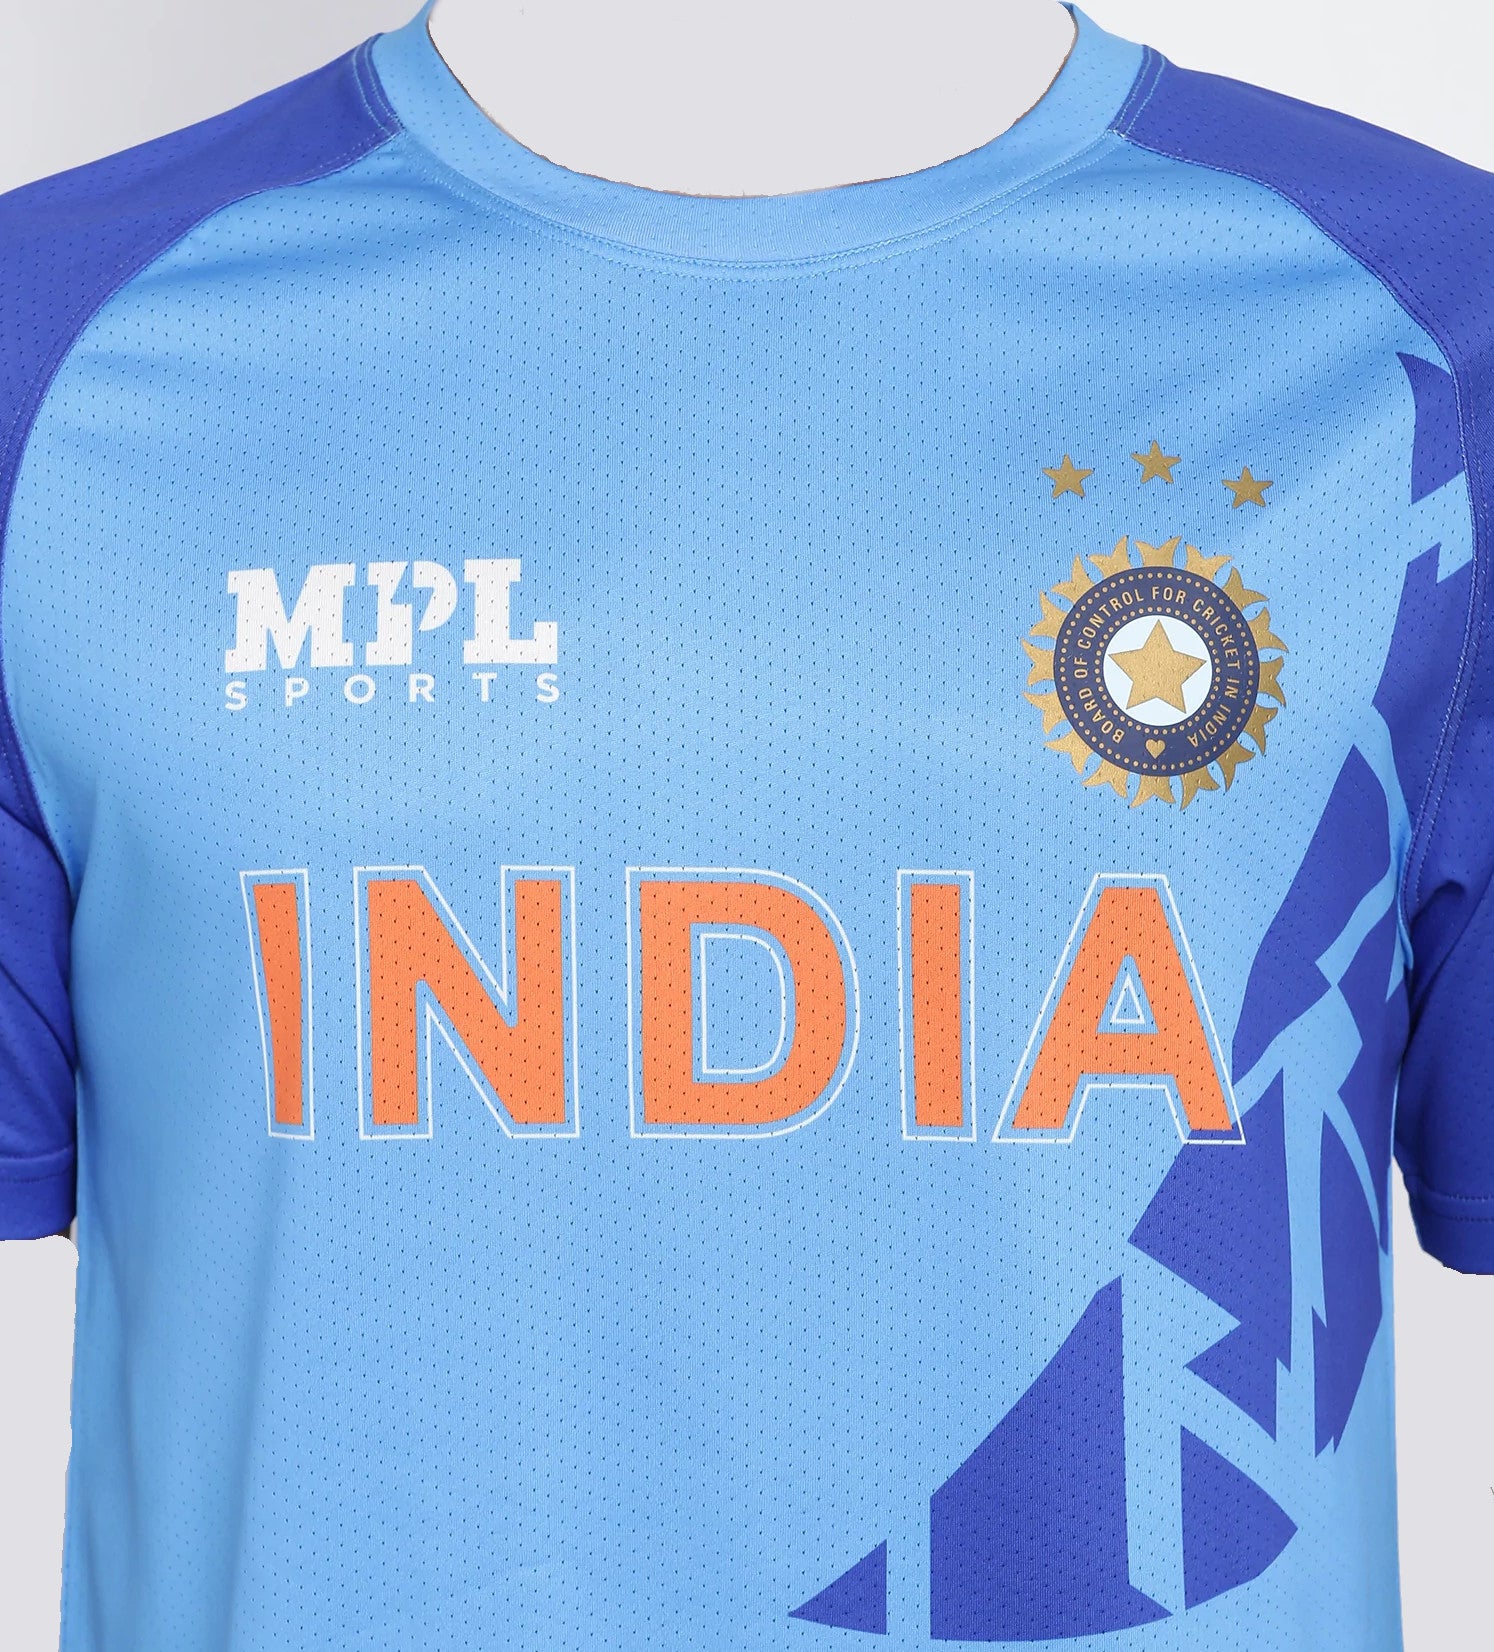 indian football jersey 2022